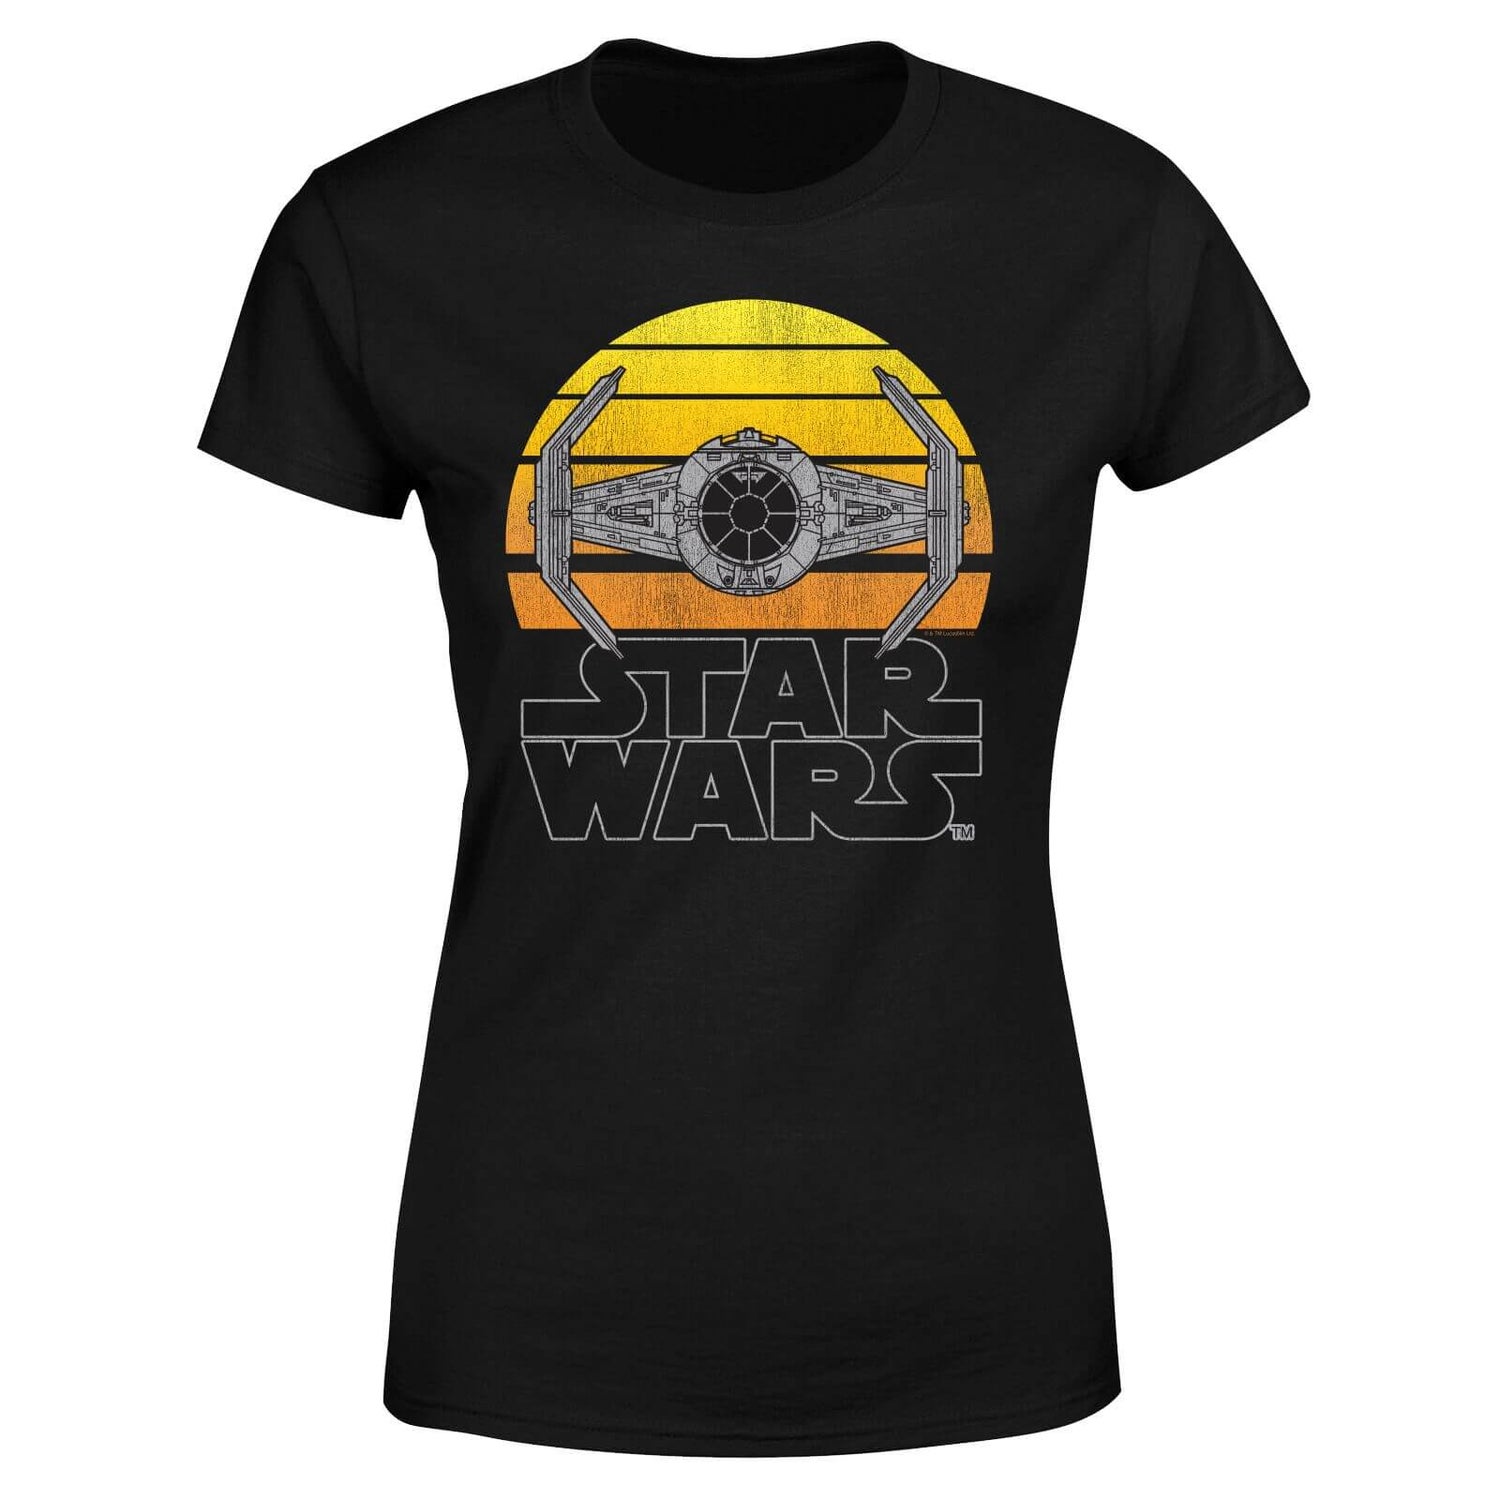 Star Wars Classic Sunset Tie Women's T-Shirt - Black